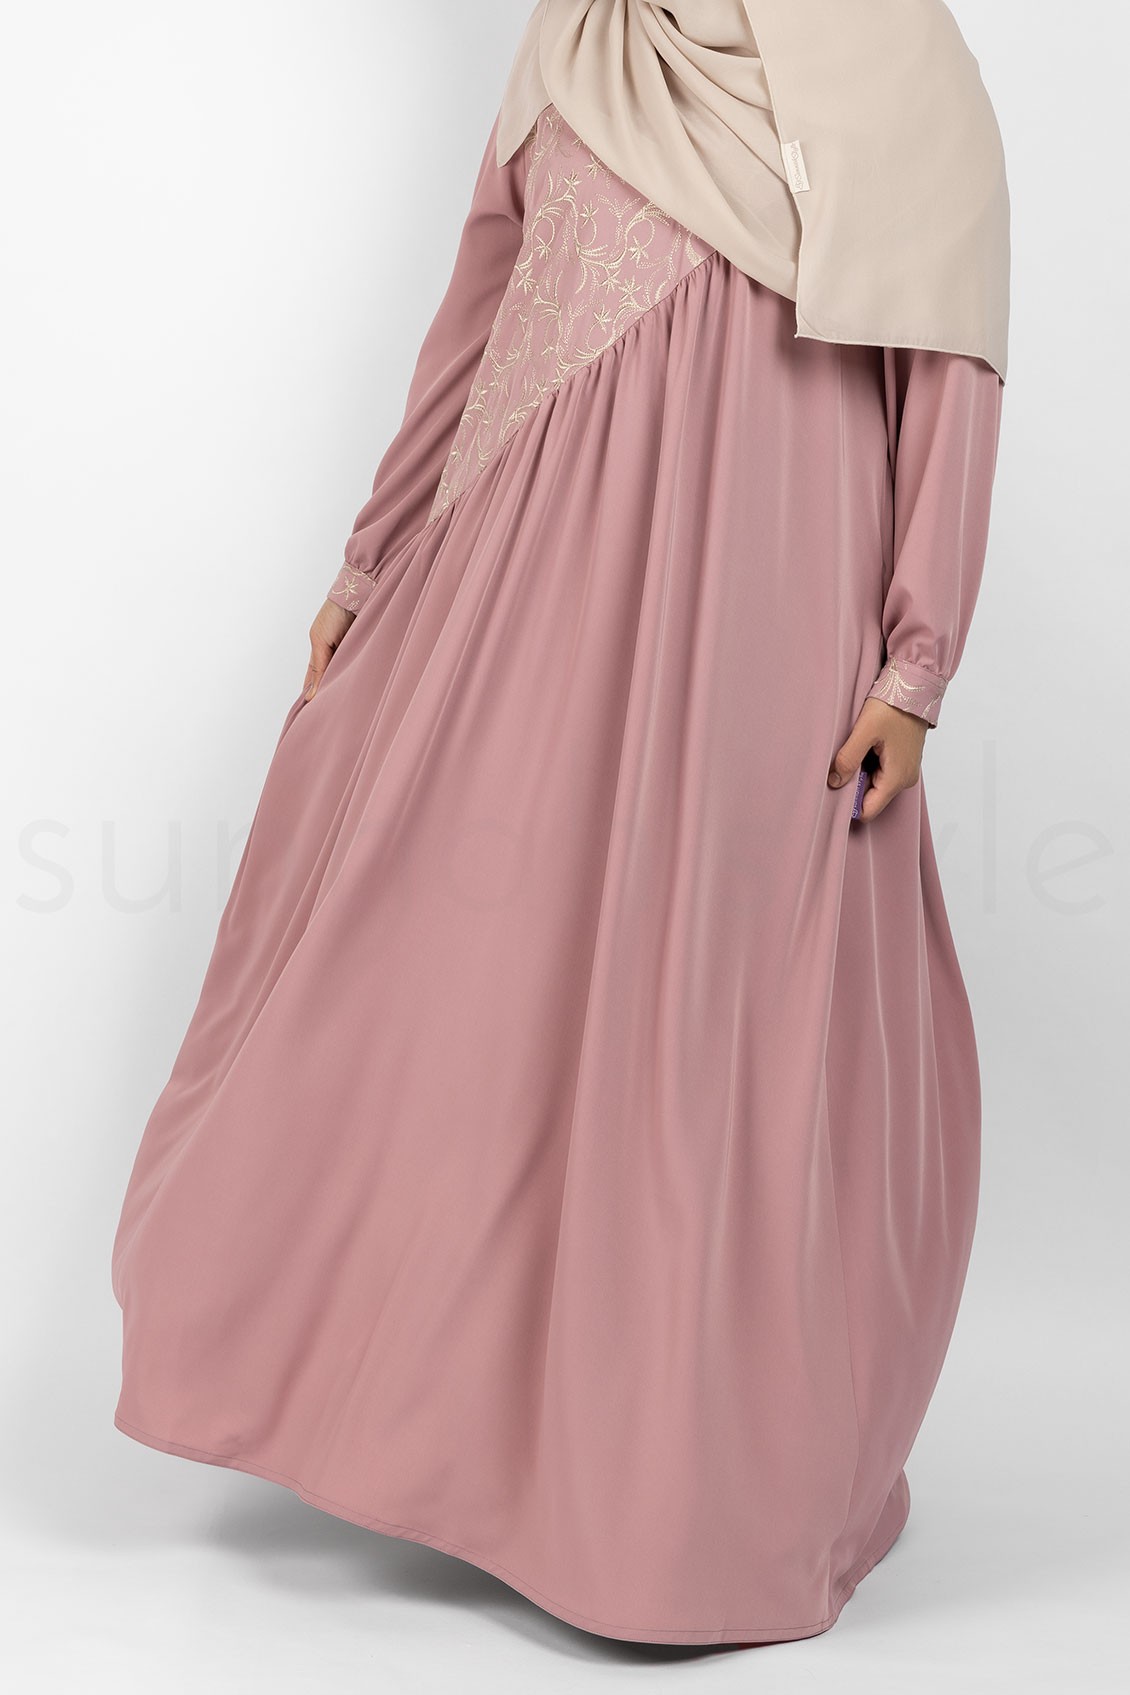 Sunnah Style Floral Umbrella Abaya Dusty Rose